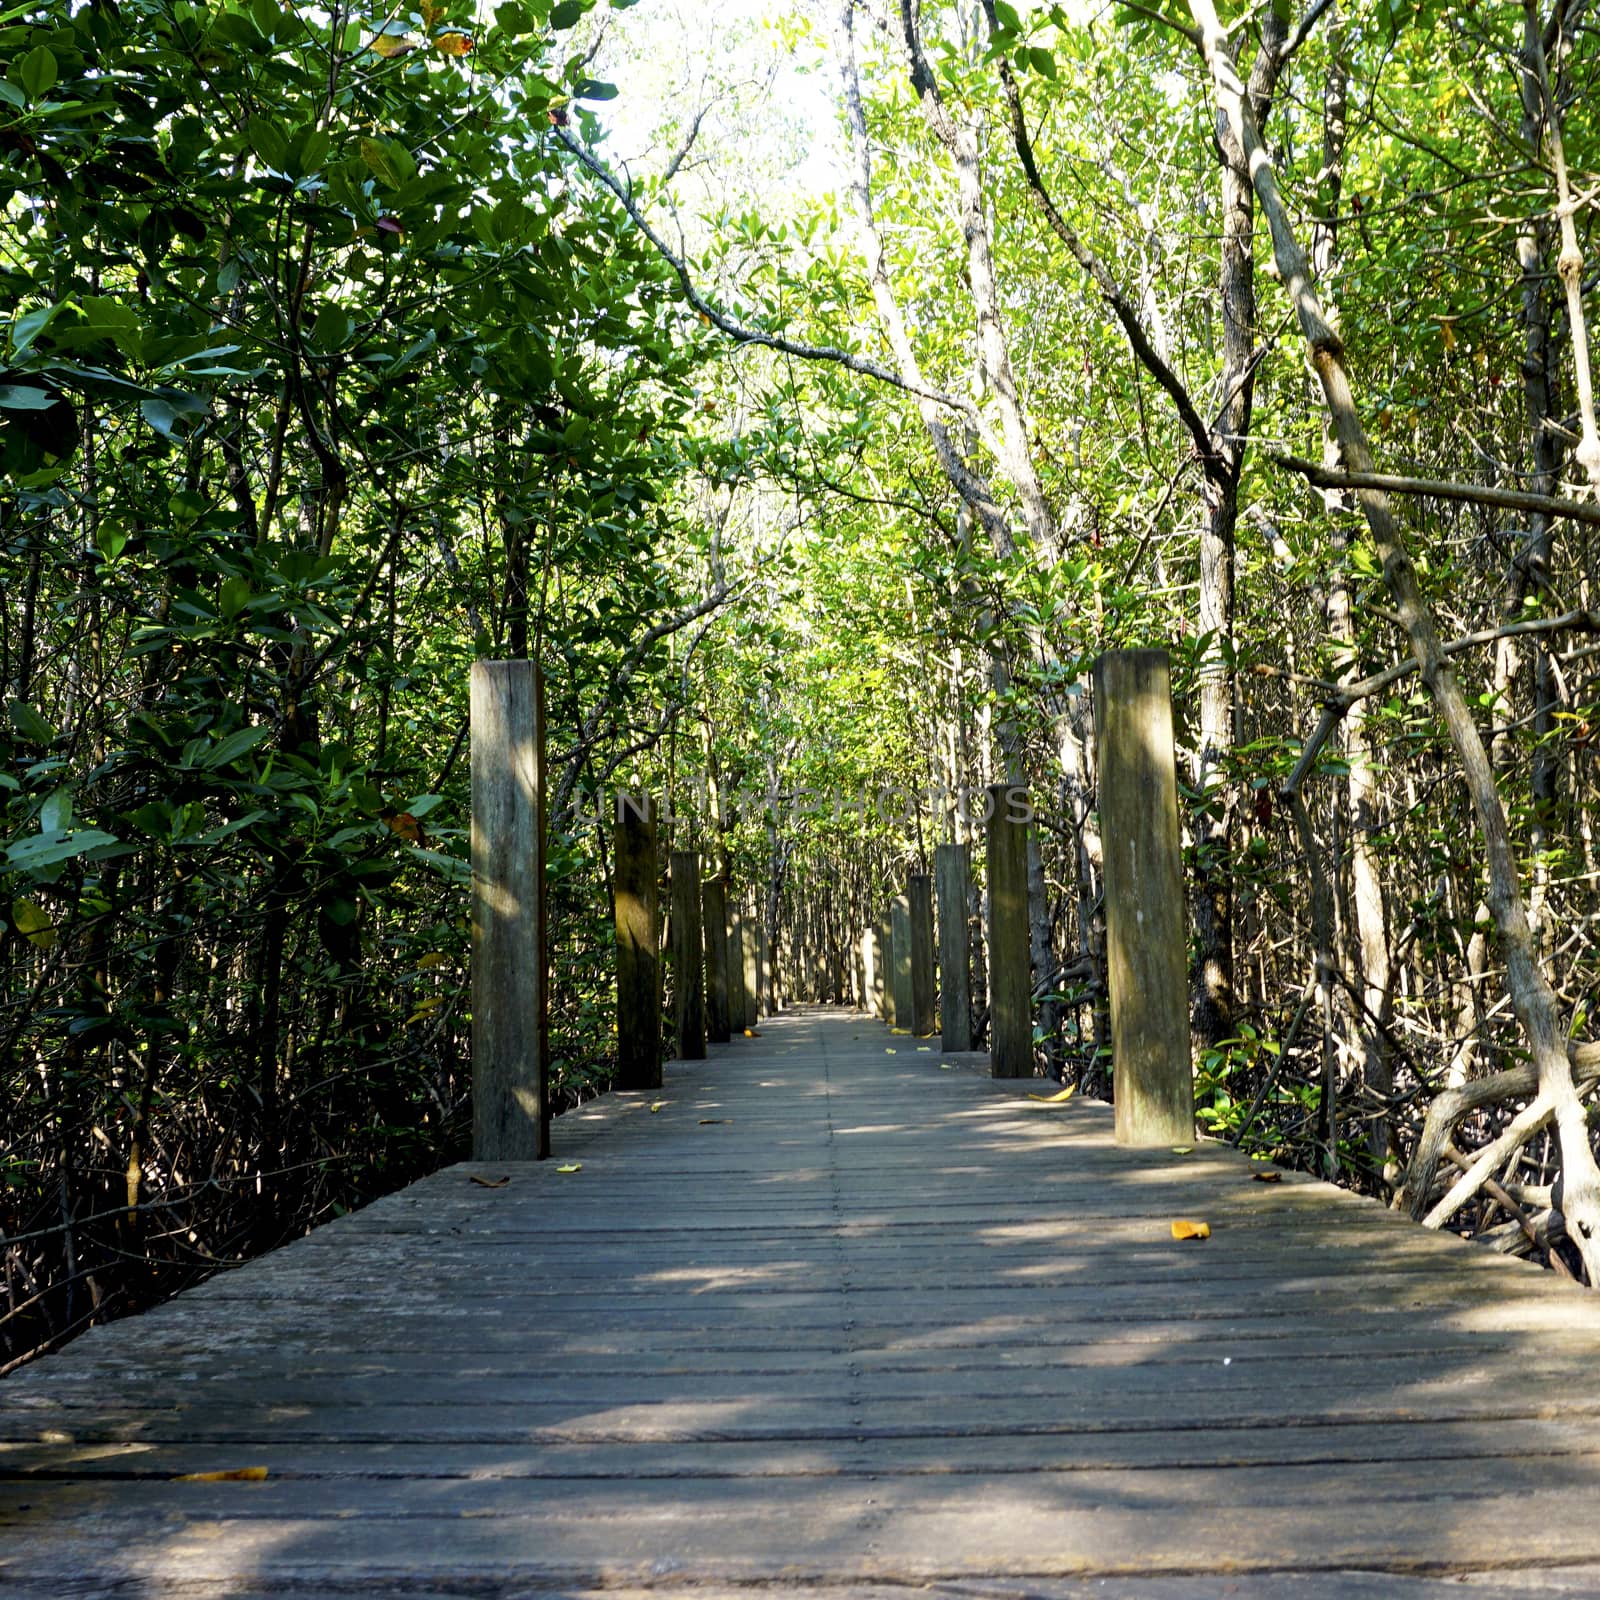 forest mangrove and the walkway wormeye view in chantaburi, Thailand